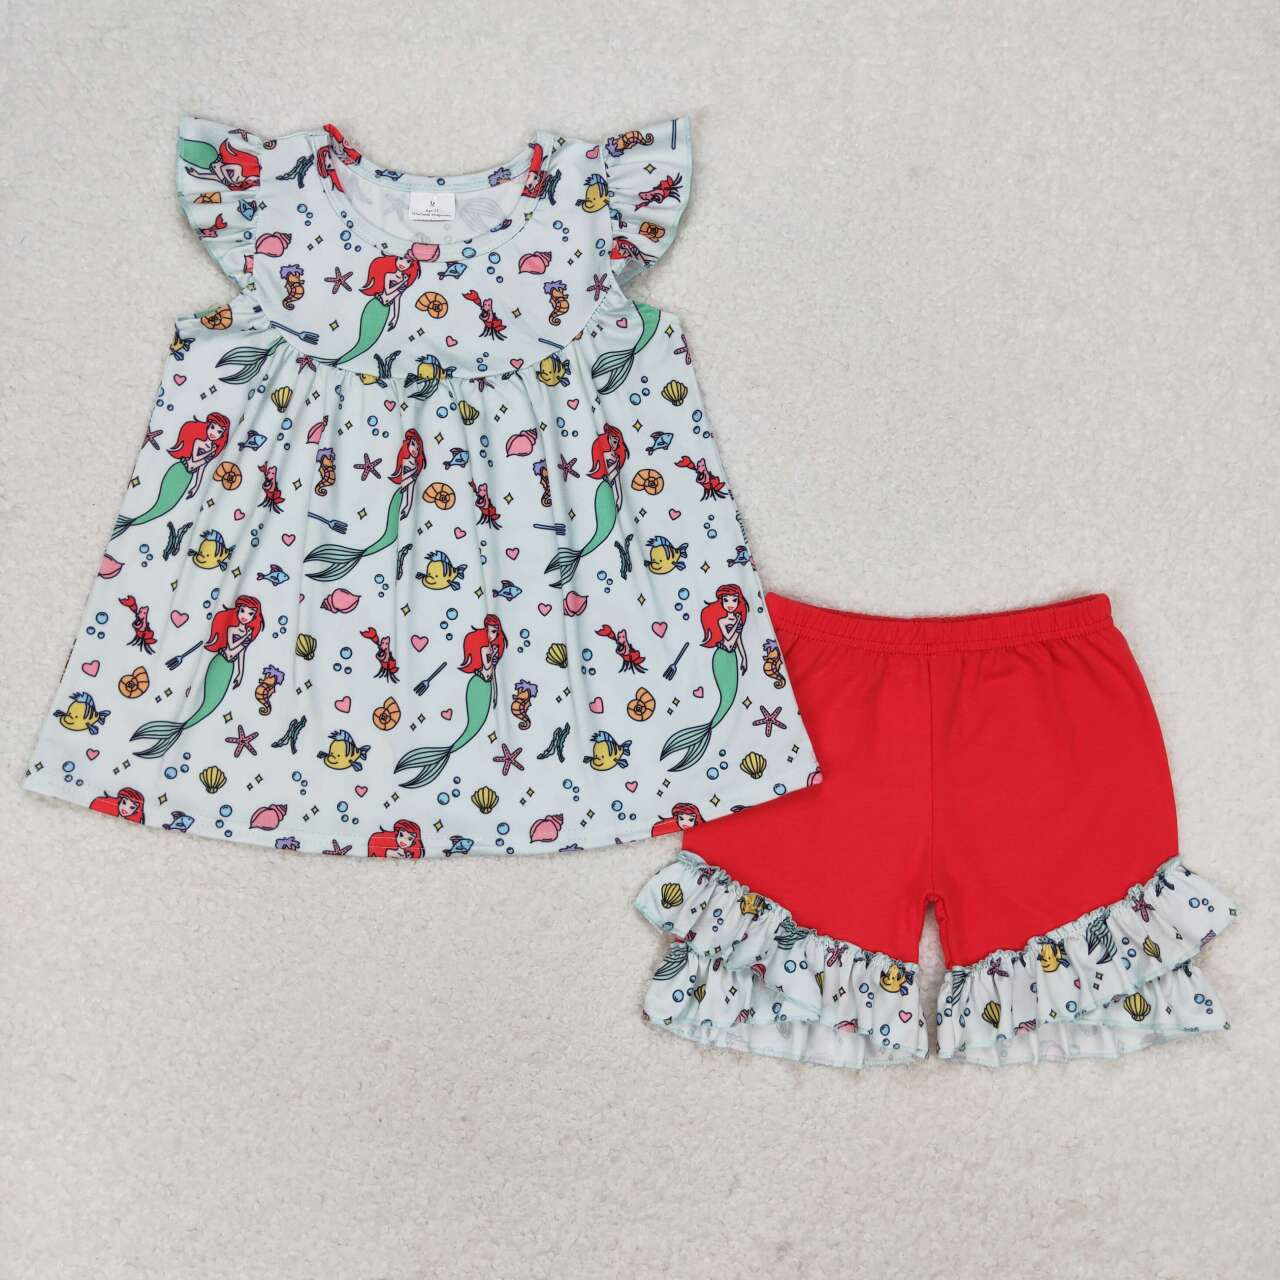 GSSO1043  Cartoon Mermaid Top Ruffle Shorts Girls Summer Clothes Set